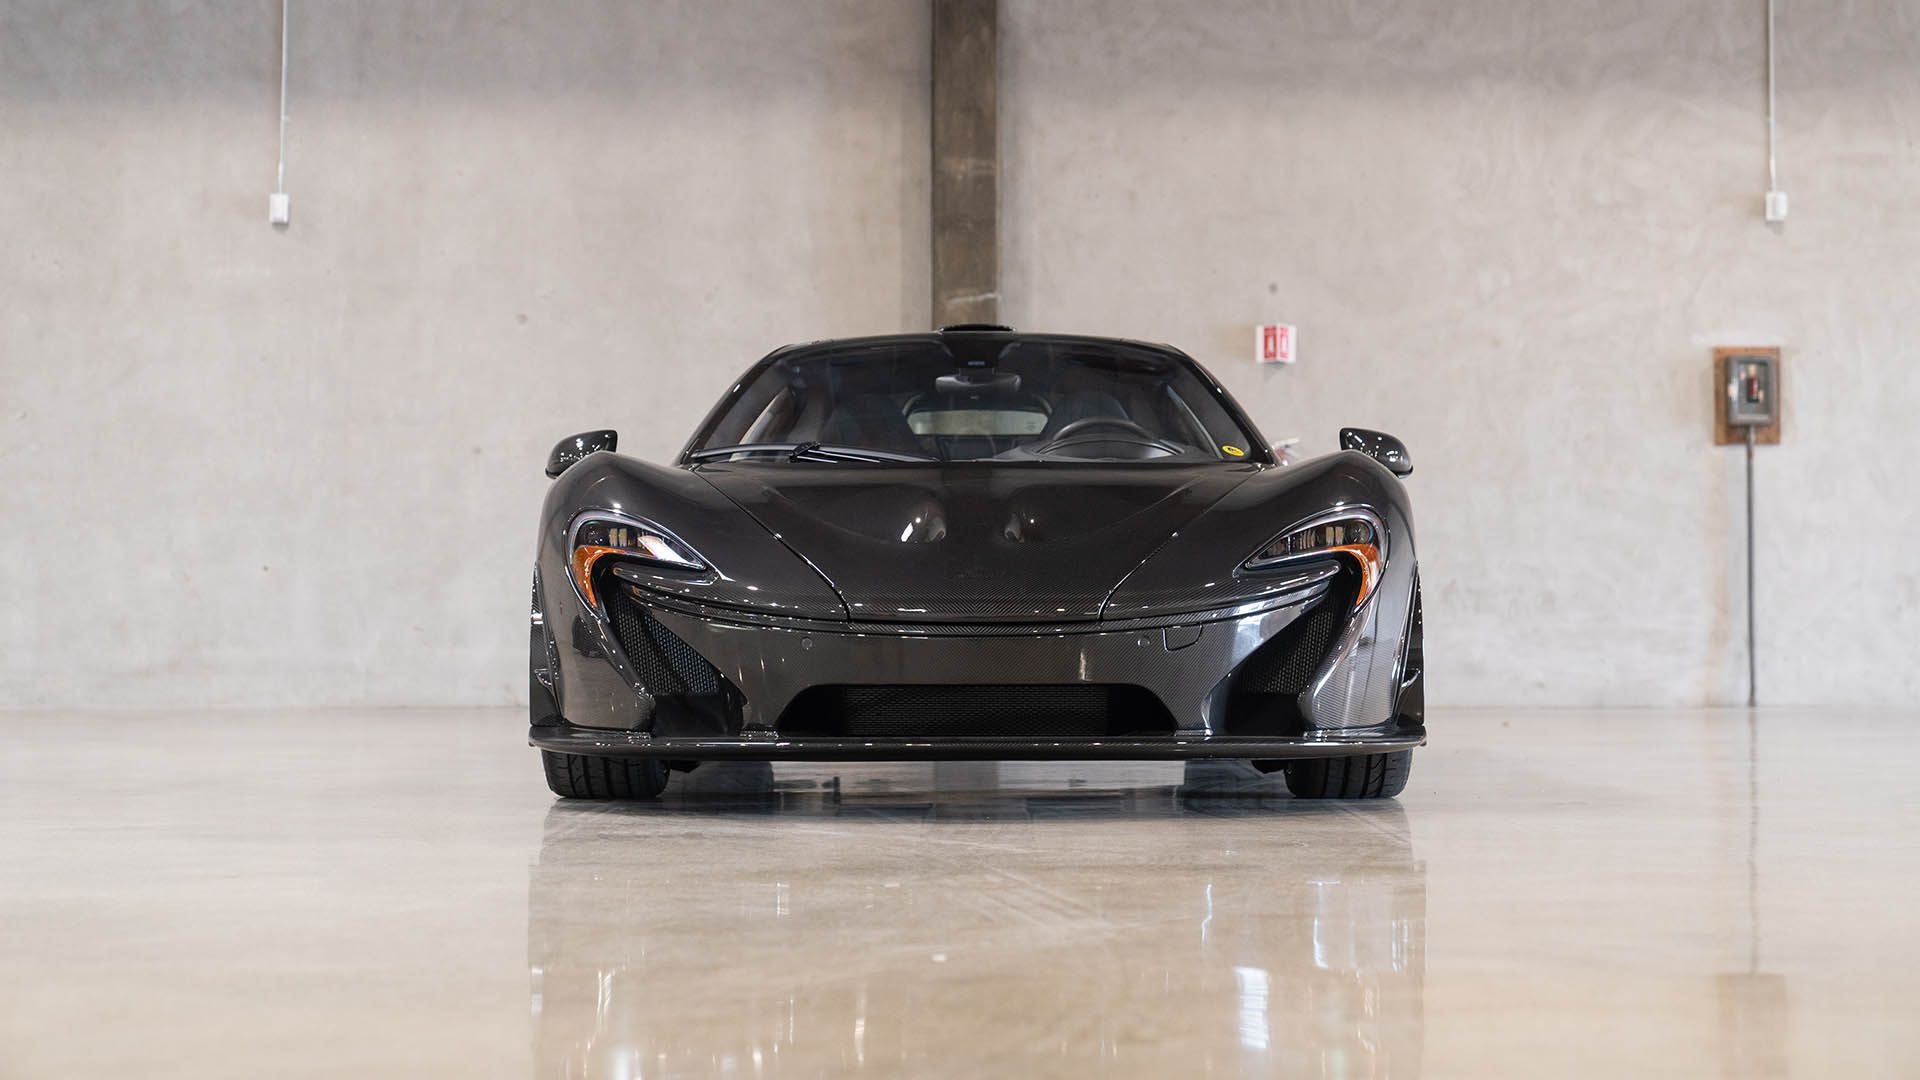 For Sale 2015 McLaren P1